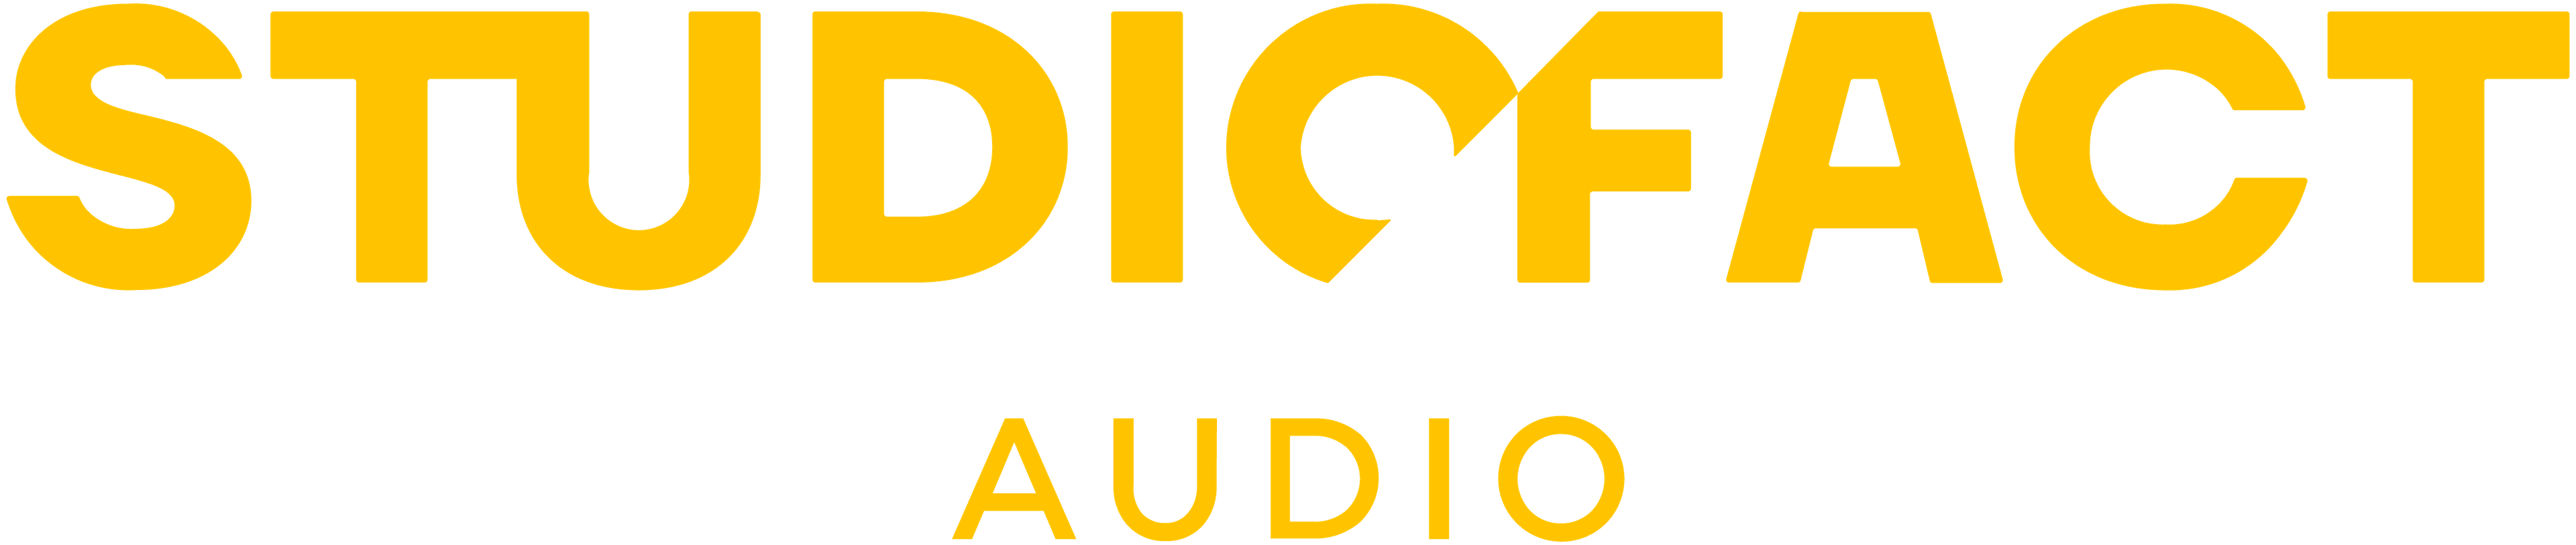 StudioFact Audio